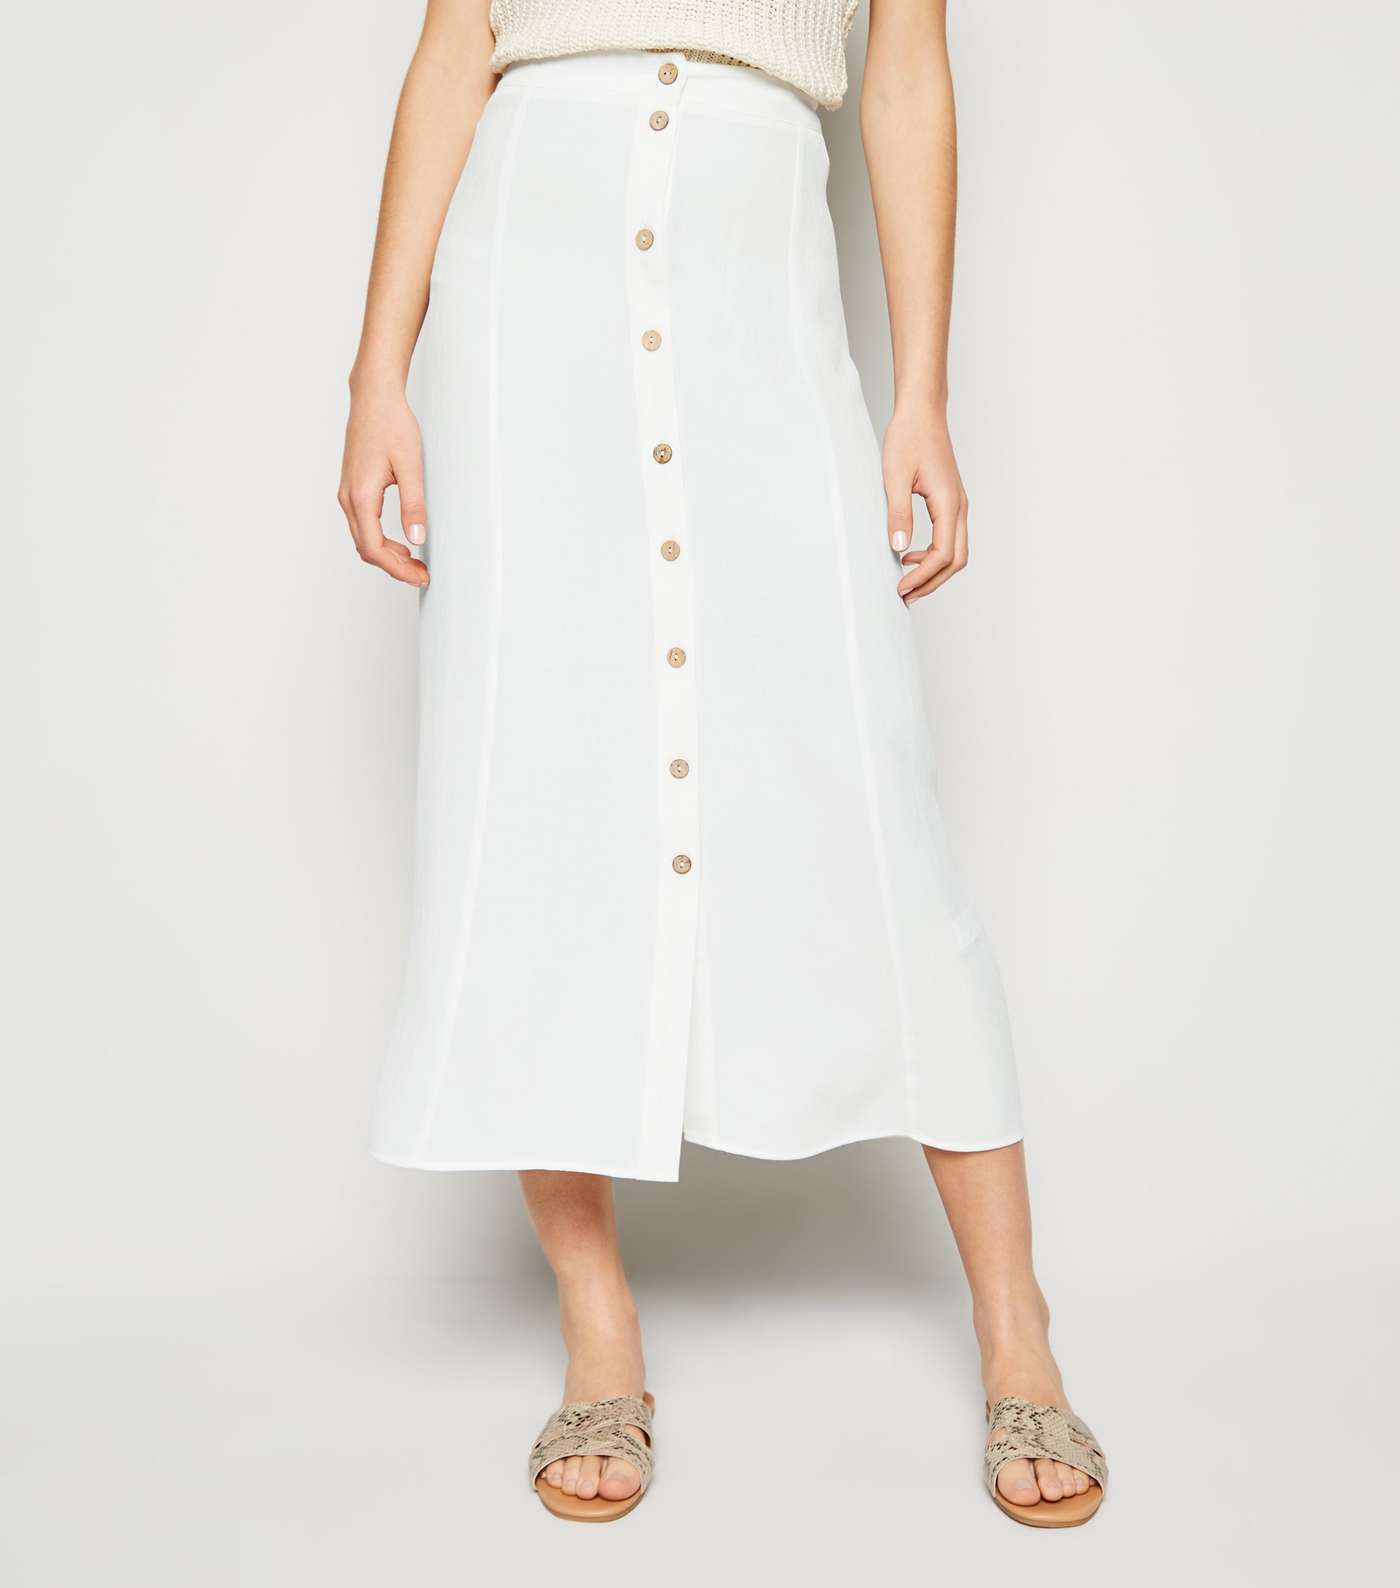 White Button Front Midaxi Skirt Image 2